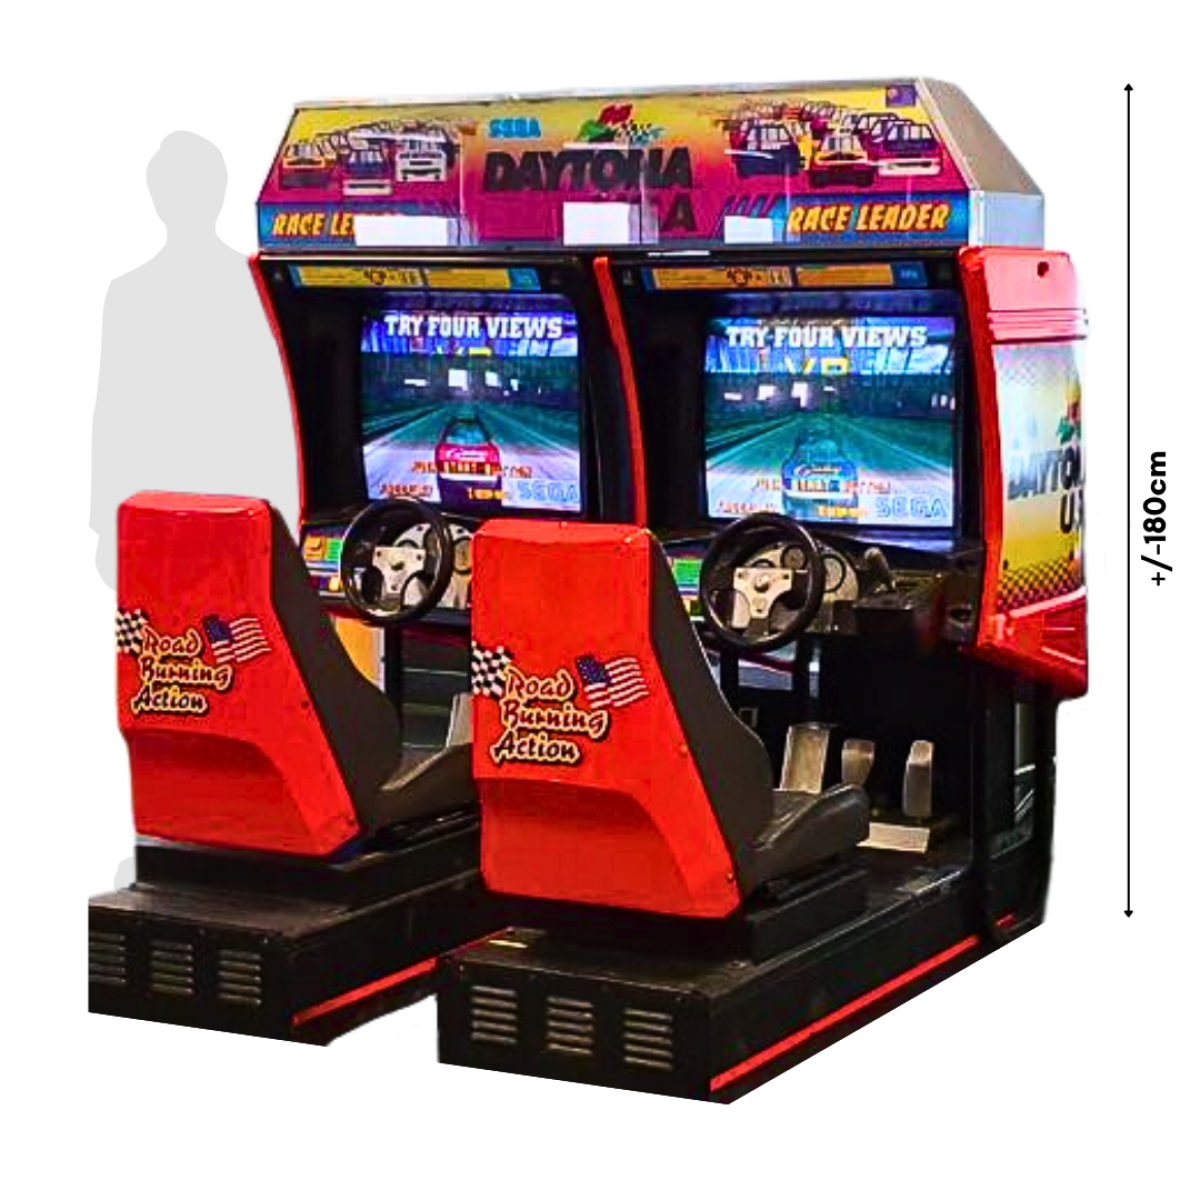 Daytona Racing, 2 Player Linked Arcade Game Rental